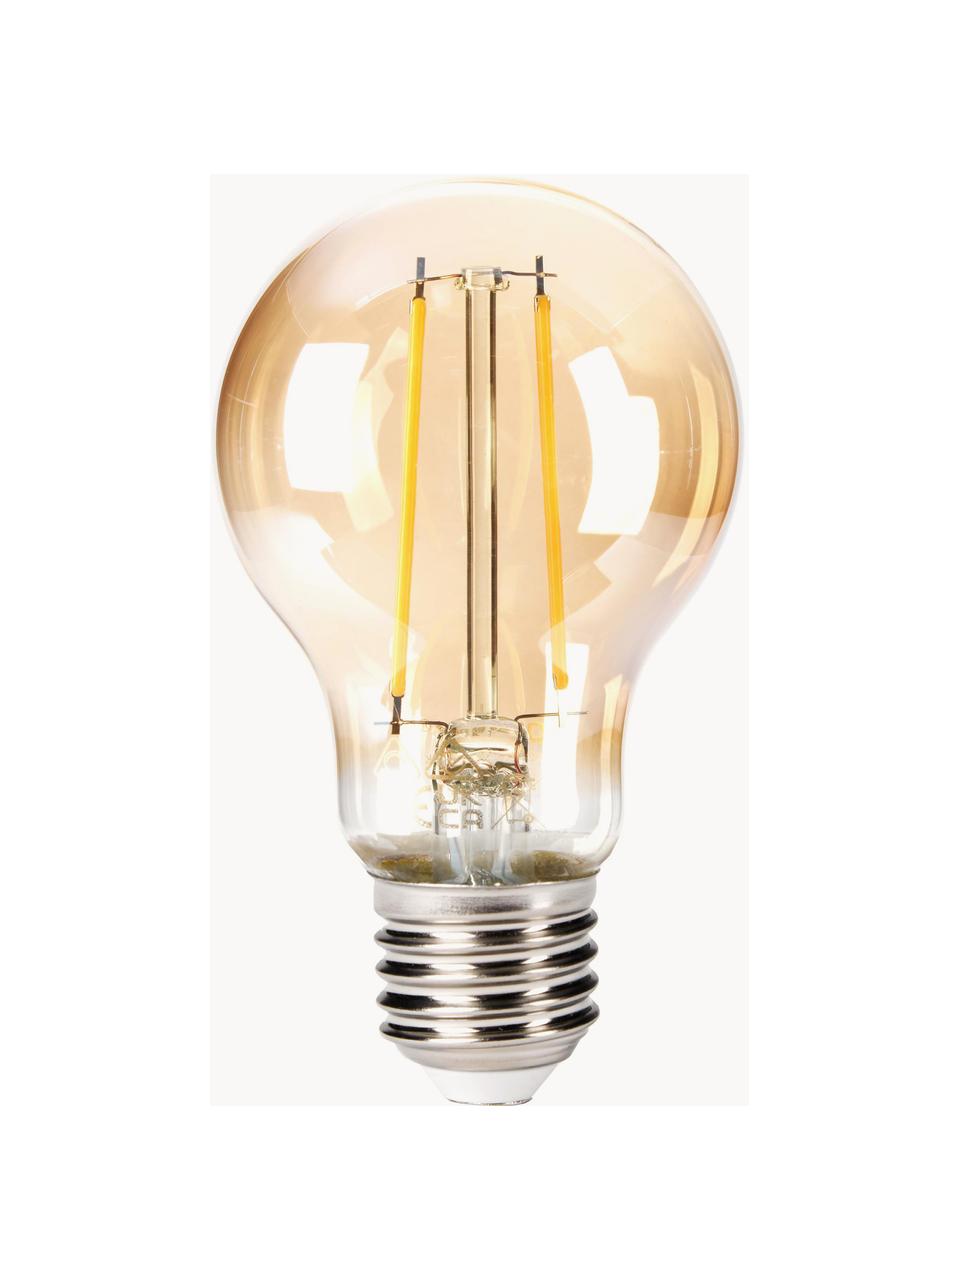 E27 Leuchtmittel, warmweiß, 1 Stück, Leuchtmittelschirm: Glas, Leuchtmittelfassung: Aluminium, beschichtet, Transparent, Goldfarben, Ø 6 x H 10 cm